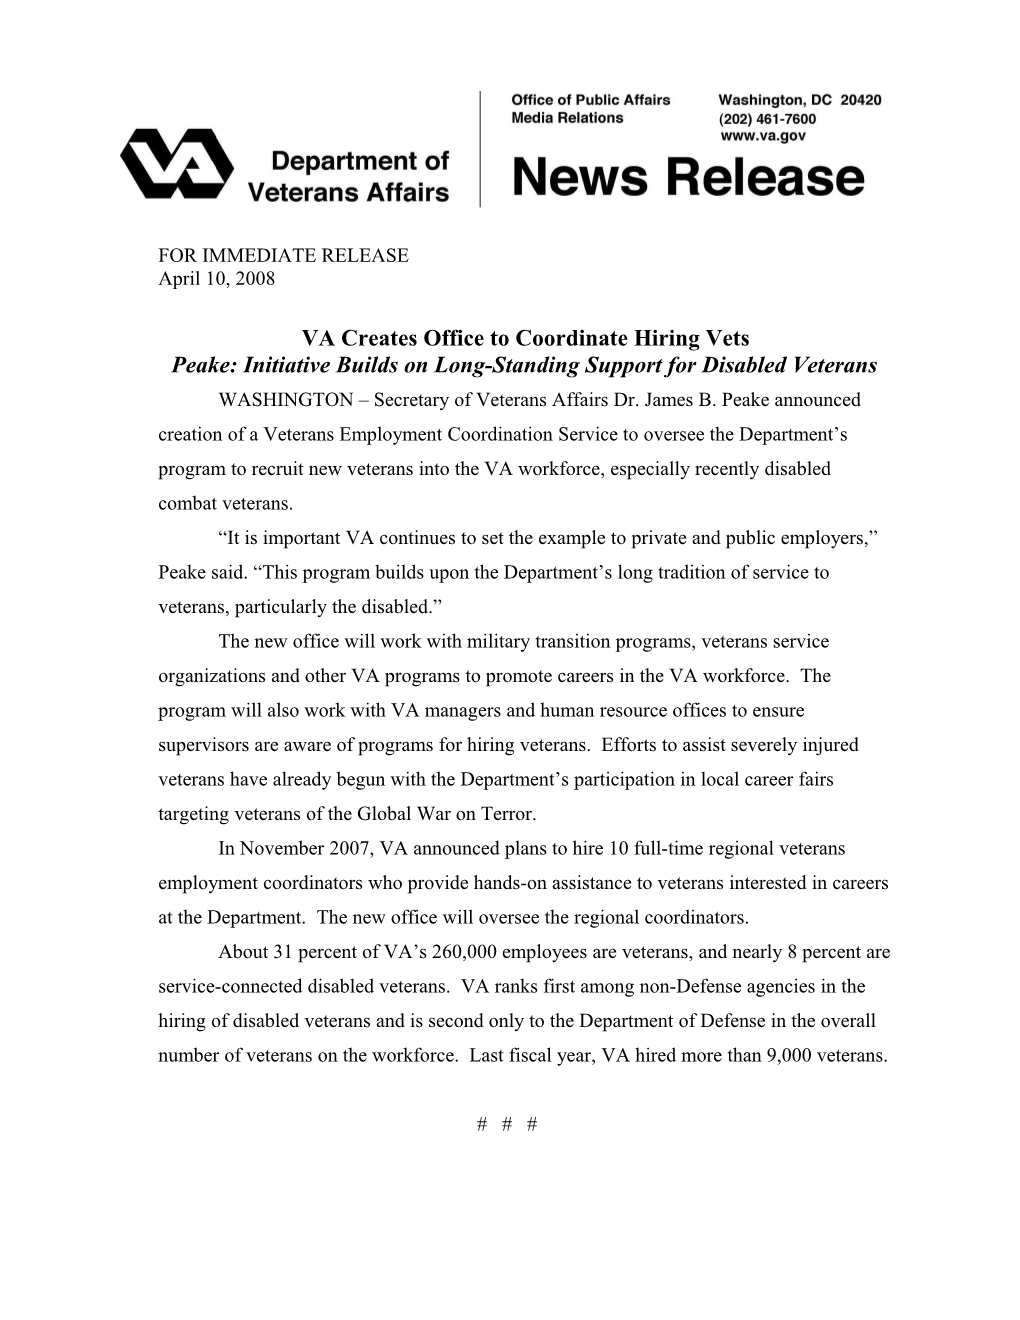 VA Creates Office to Coordinate Hiring Vets